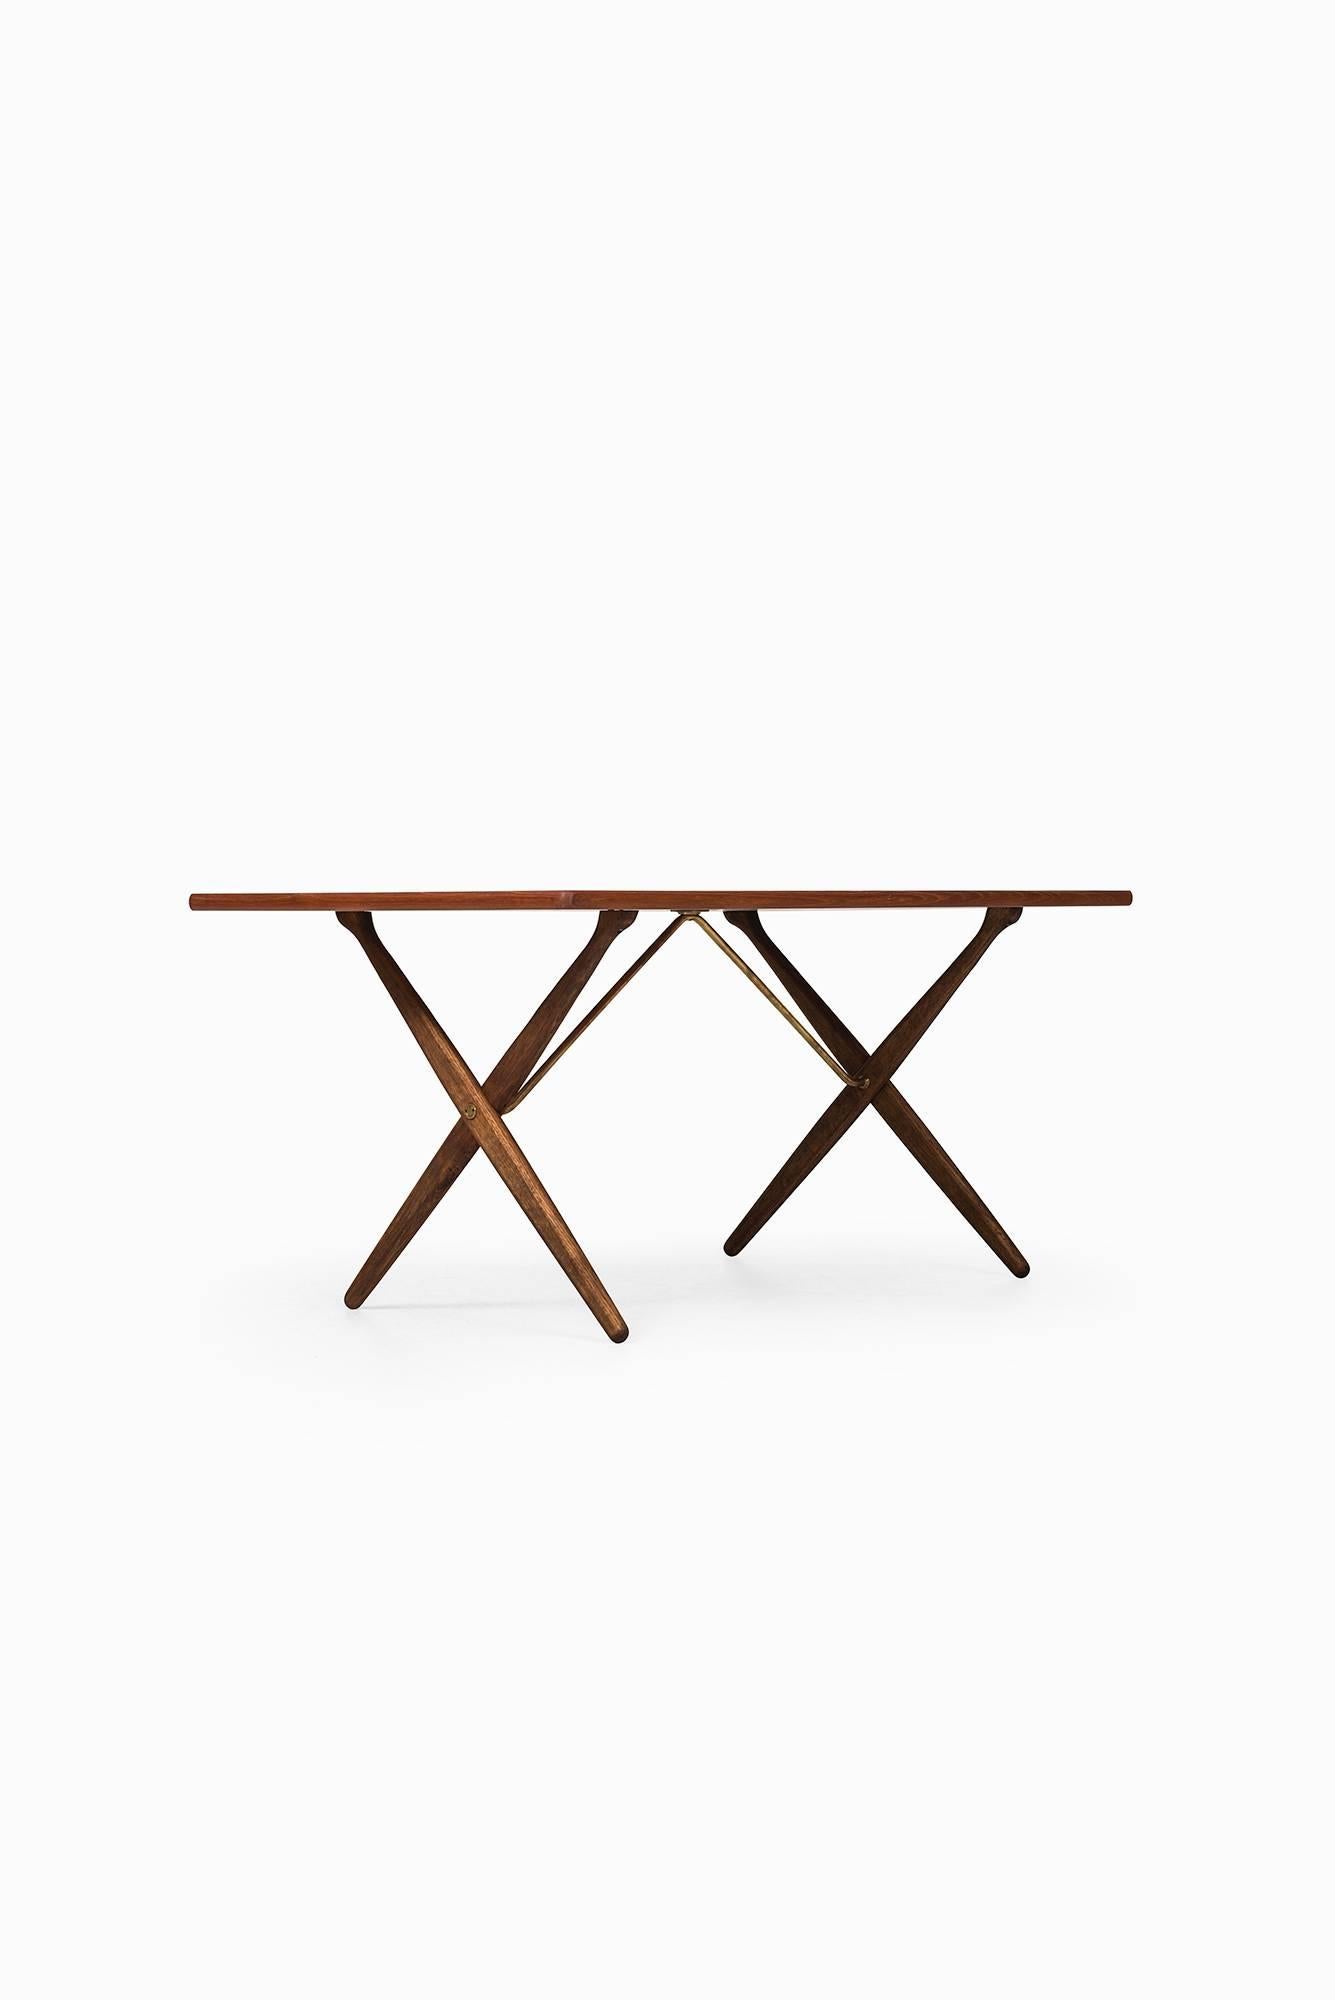 Rare dining table/desk model AT-303 designed by Hans Wegner. Produced by Andreas Tuck in Denmark.